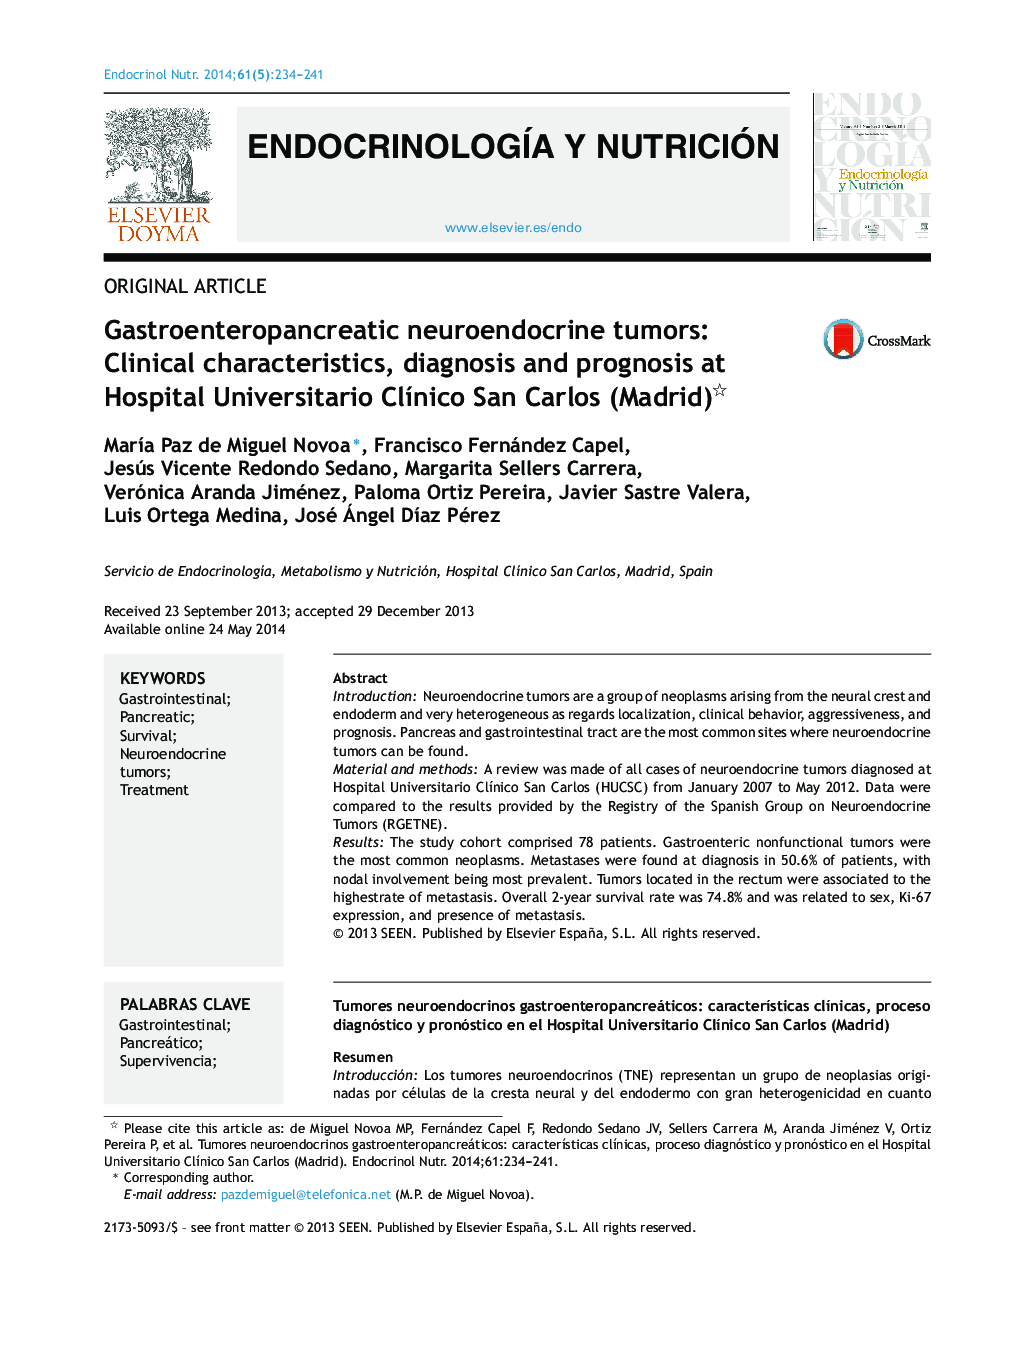 Gastroenteropancreatic neuroendocrine tumors: Clinical characteristics, diagnosis and prognosis at Hospital Universitario Clínico San Carlos (Madrid) 